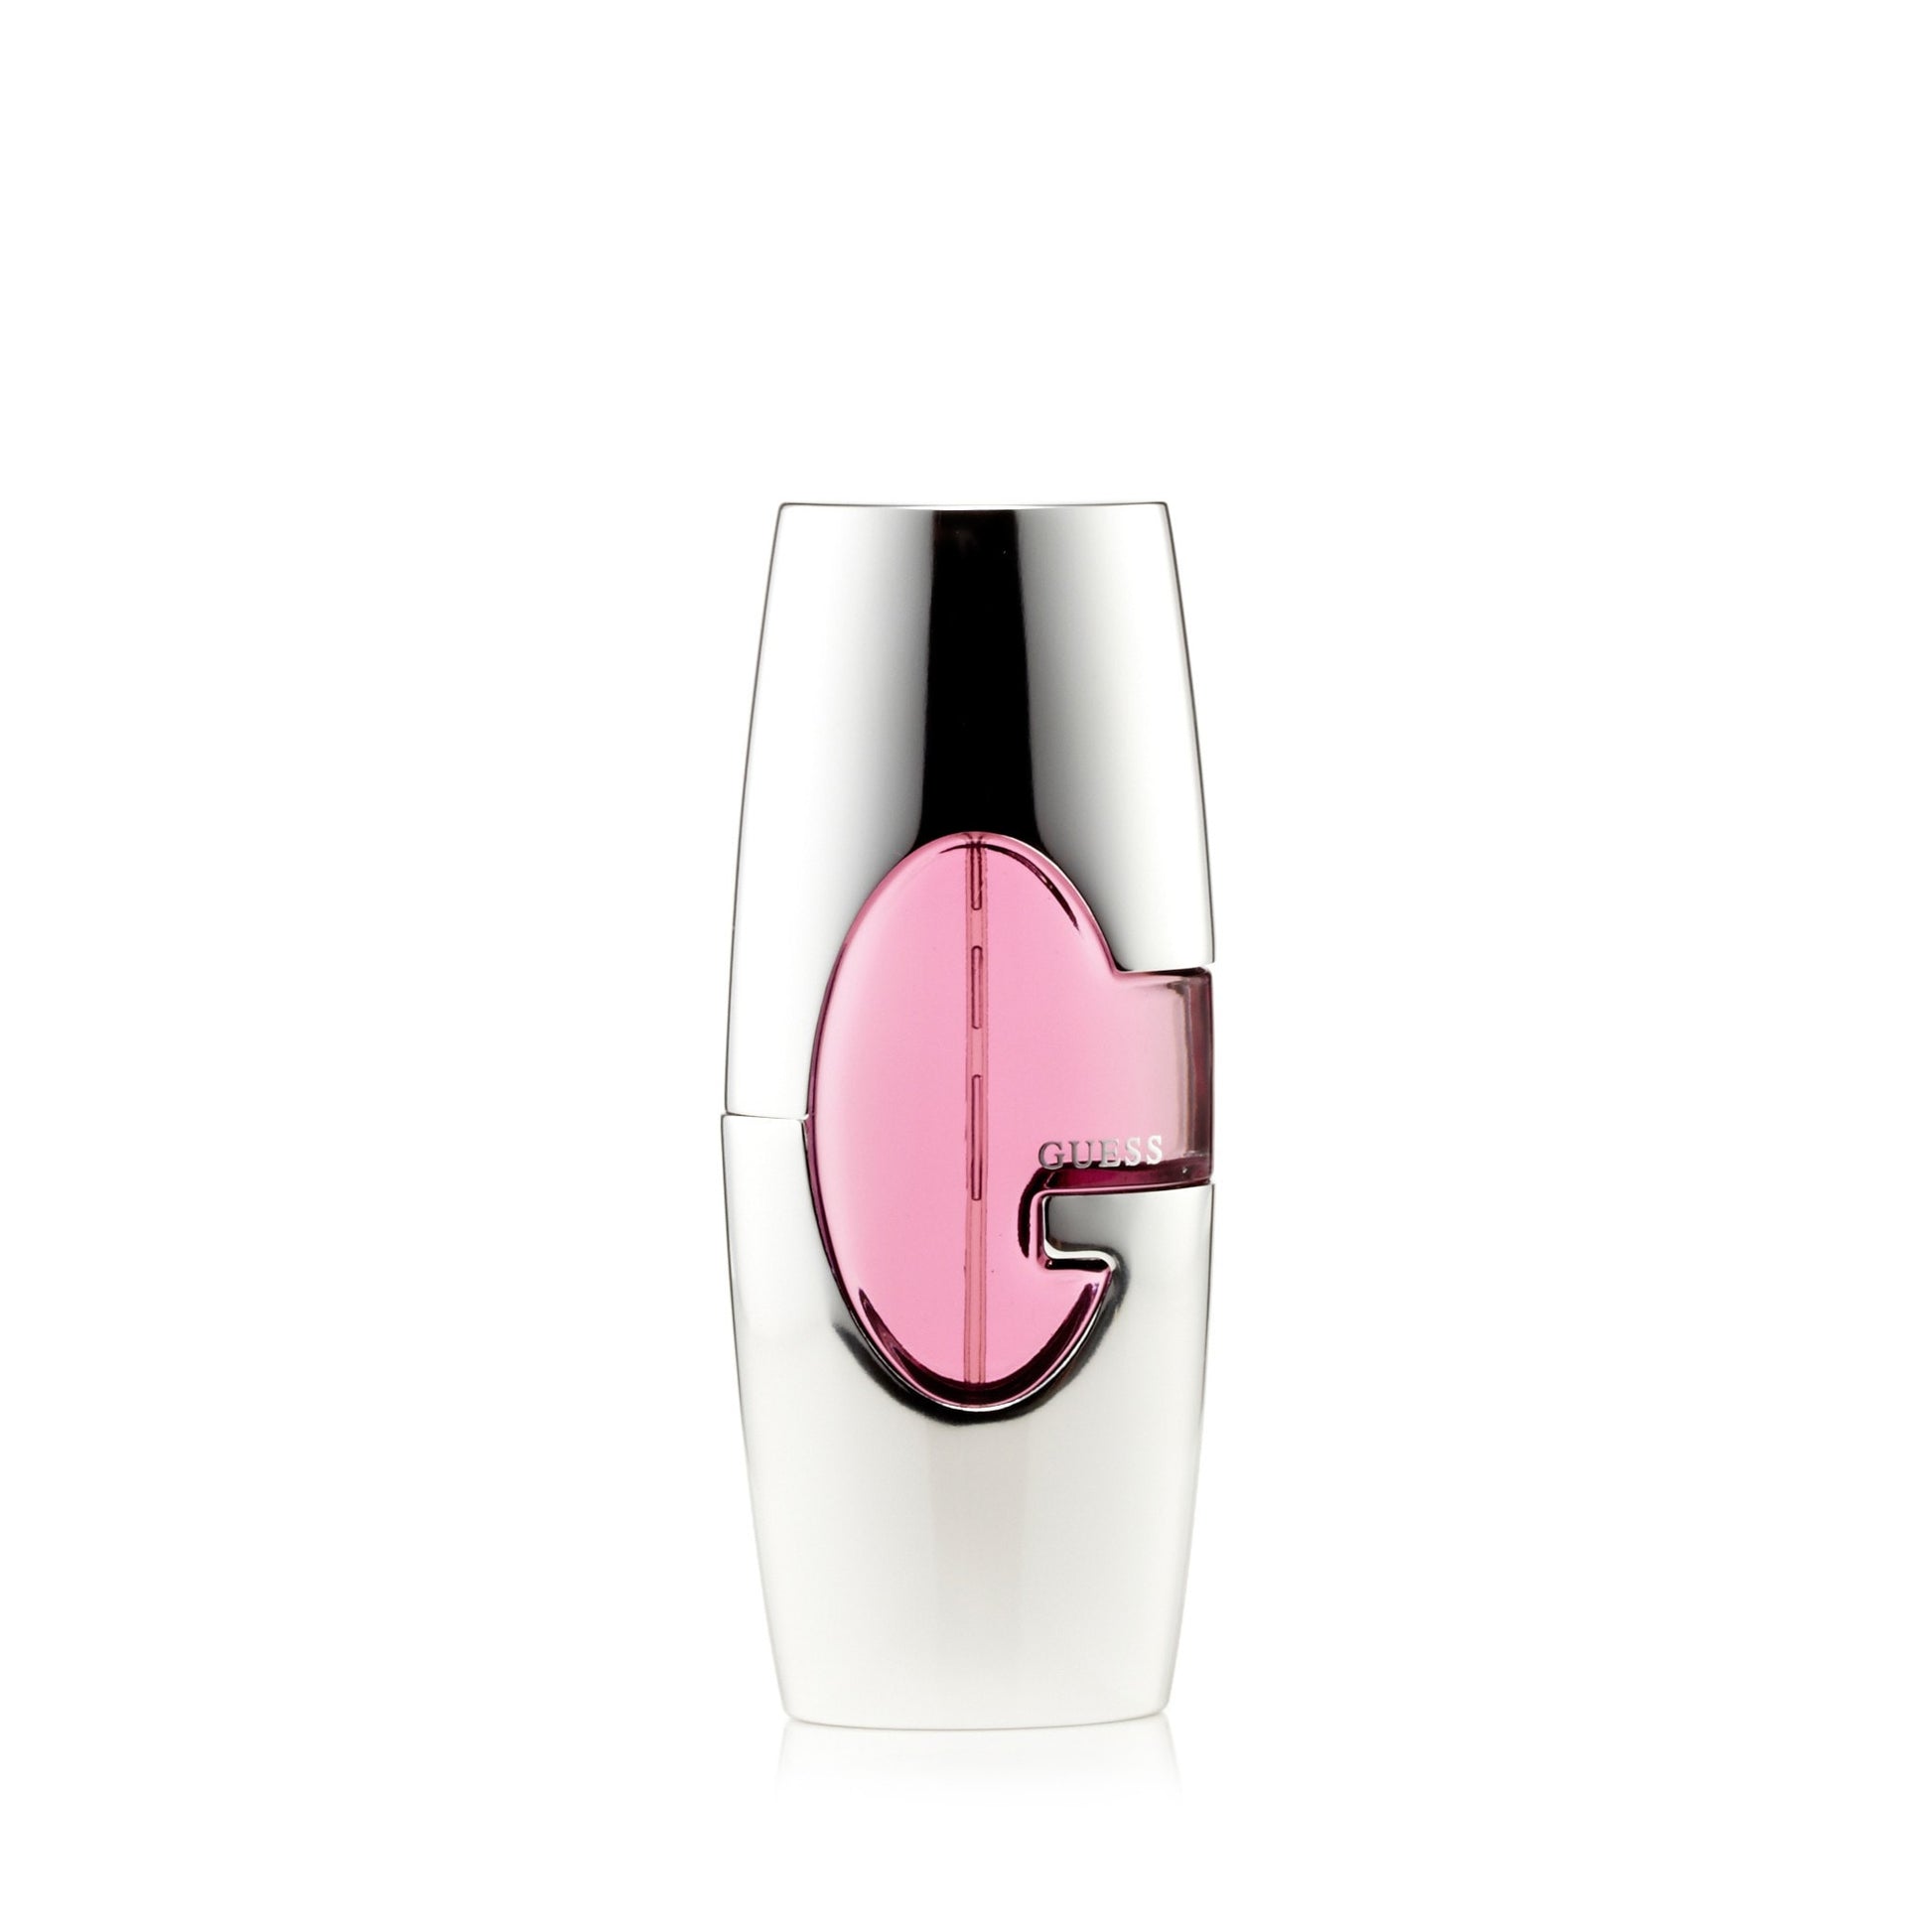 Guess Eau de Parfum Spray for Women by Guess 1.7 oz. Click to open in modal